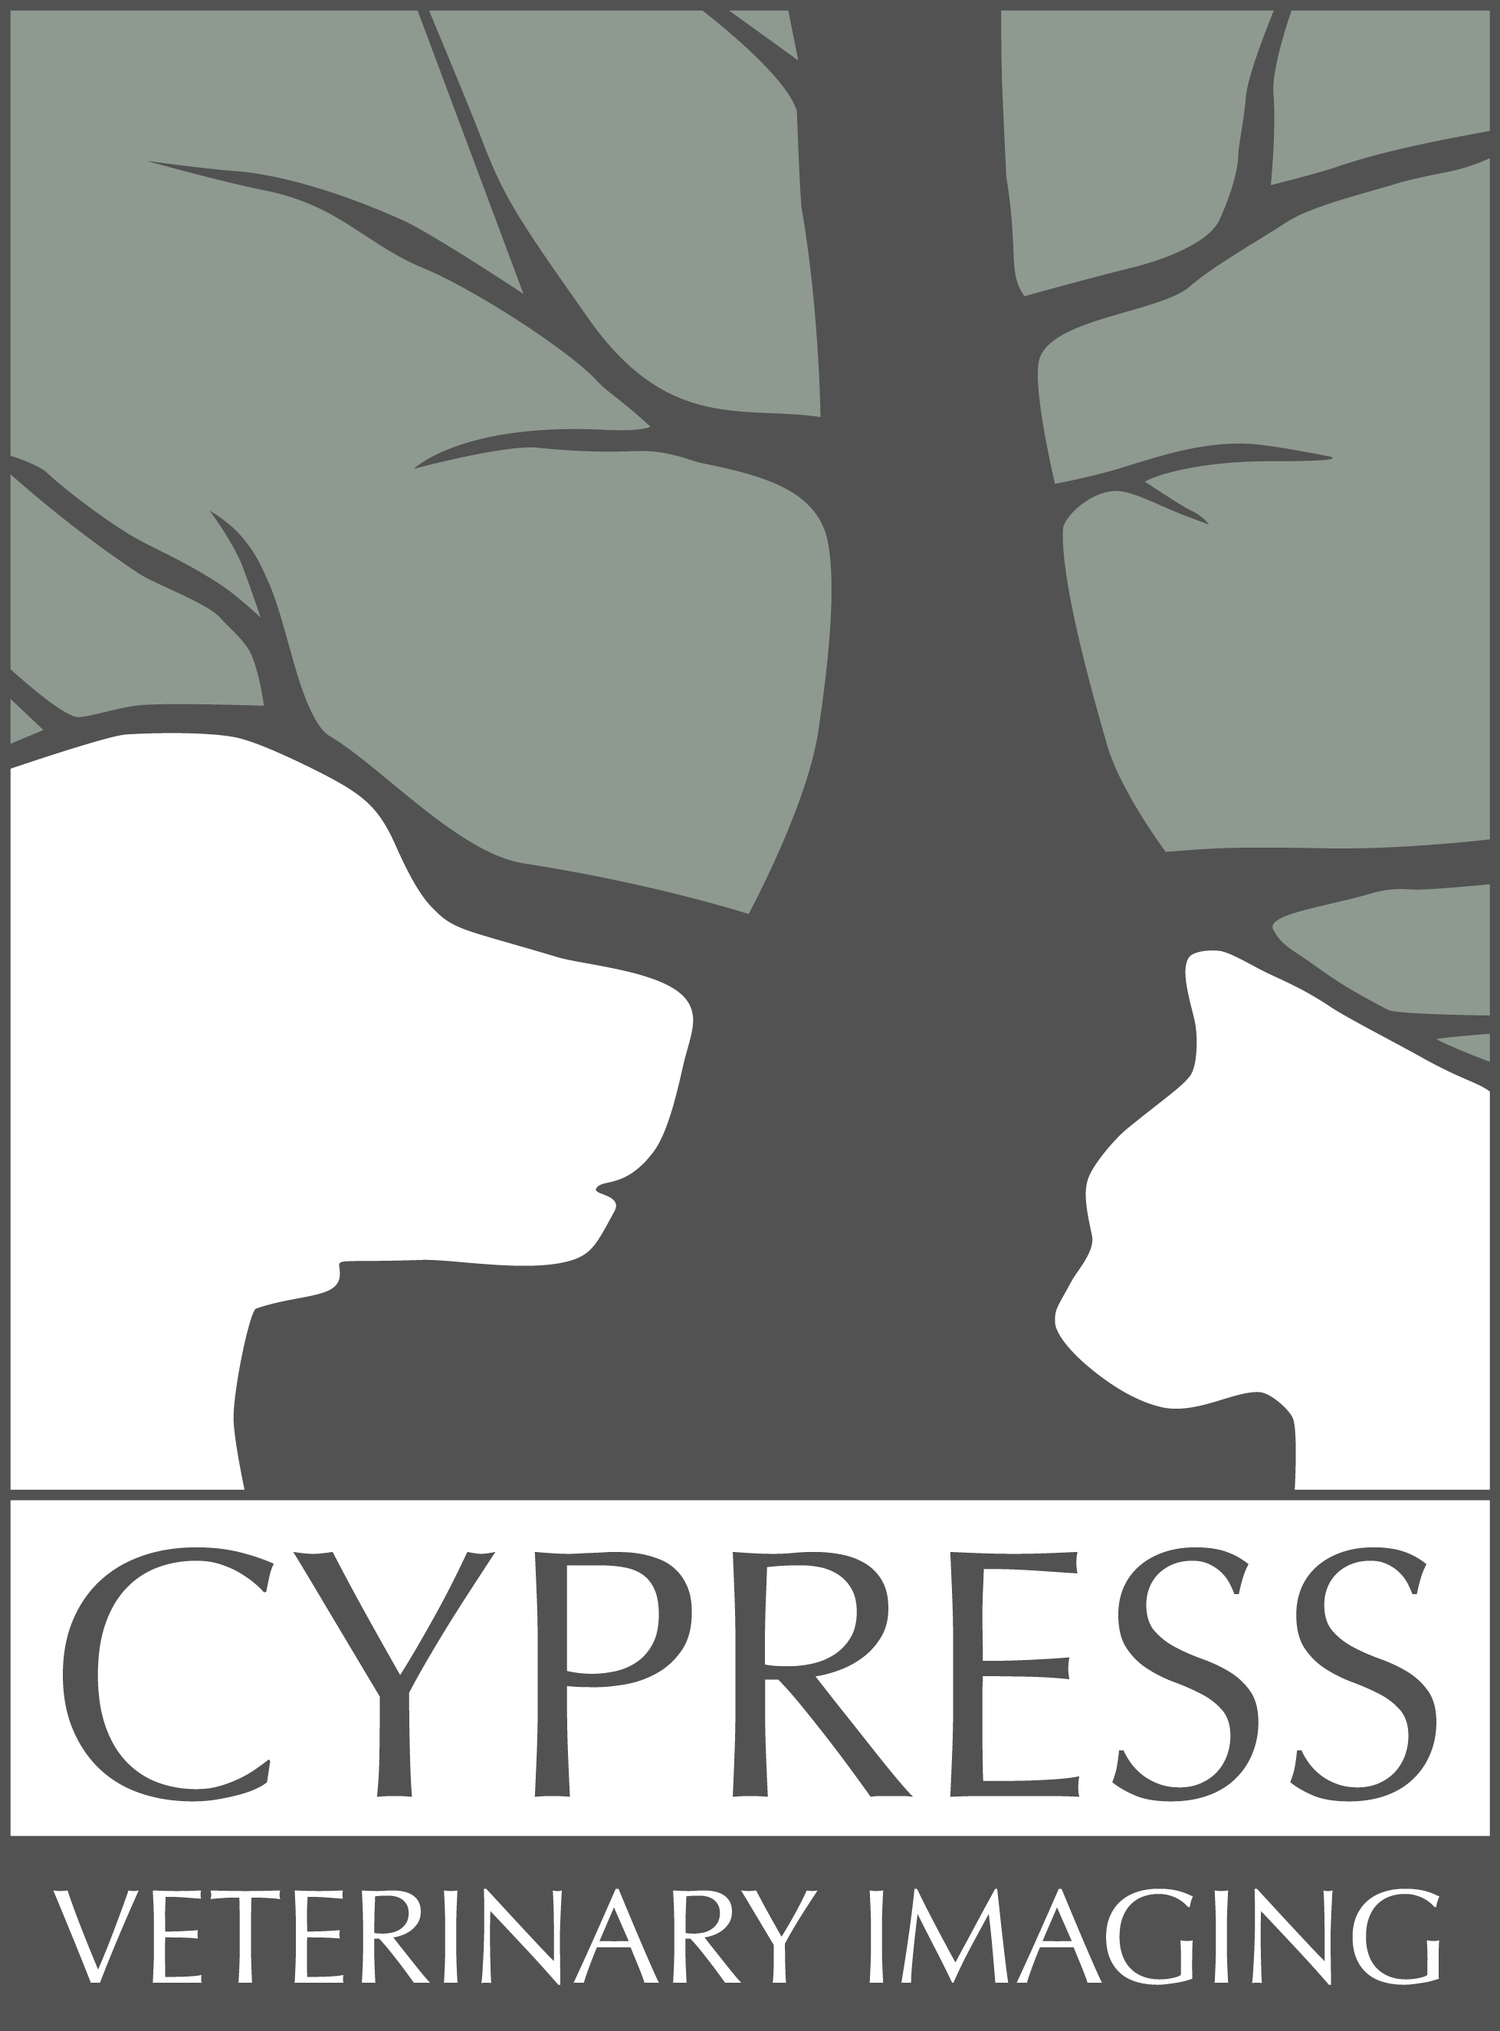 Cypress Veterinary Imaging